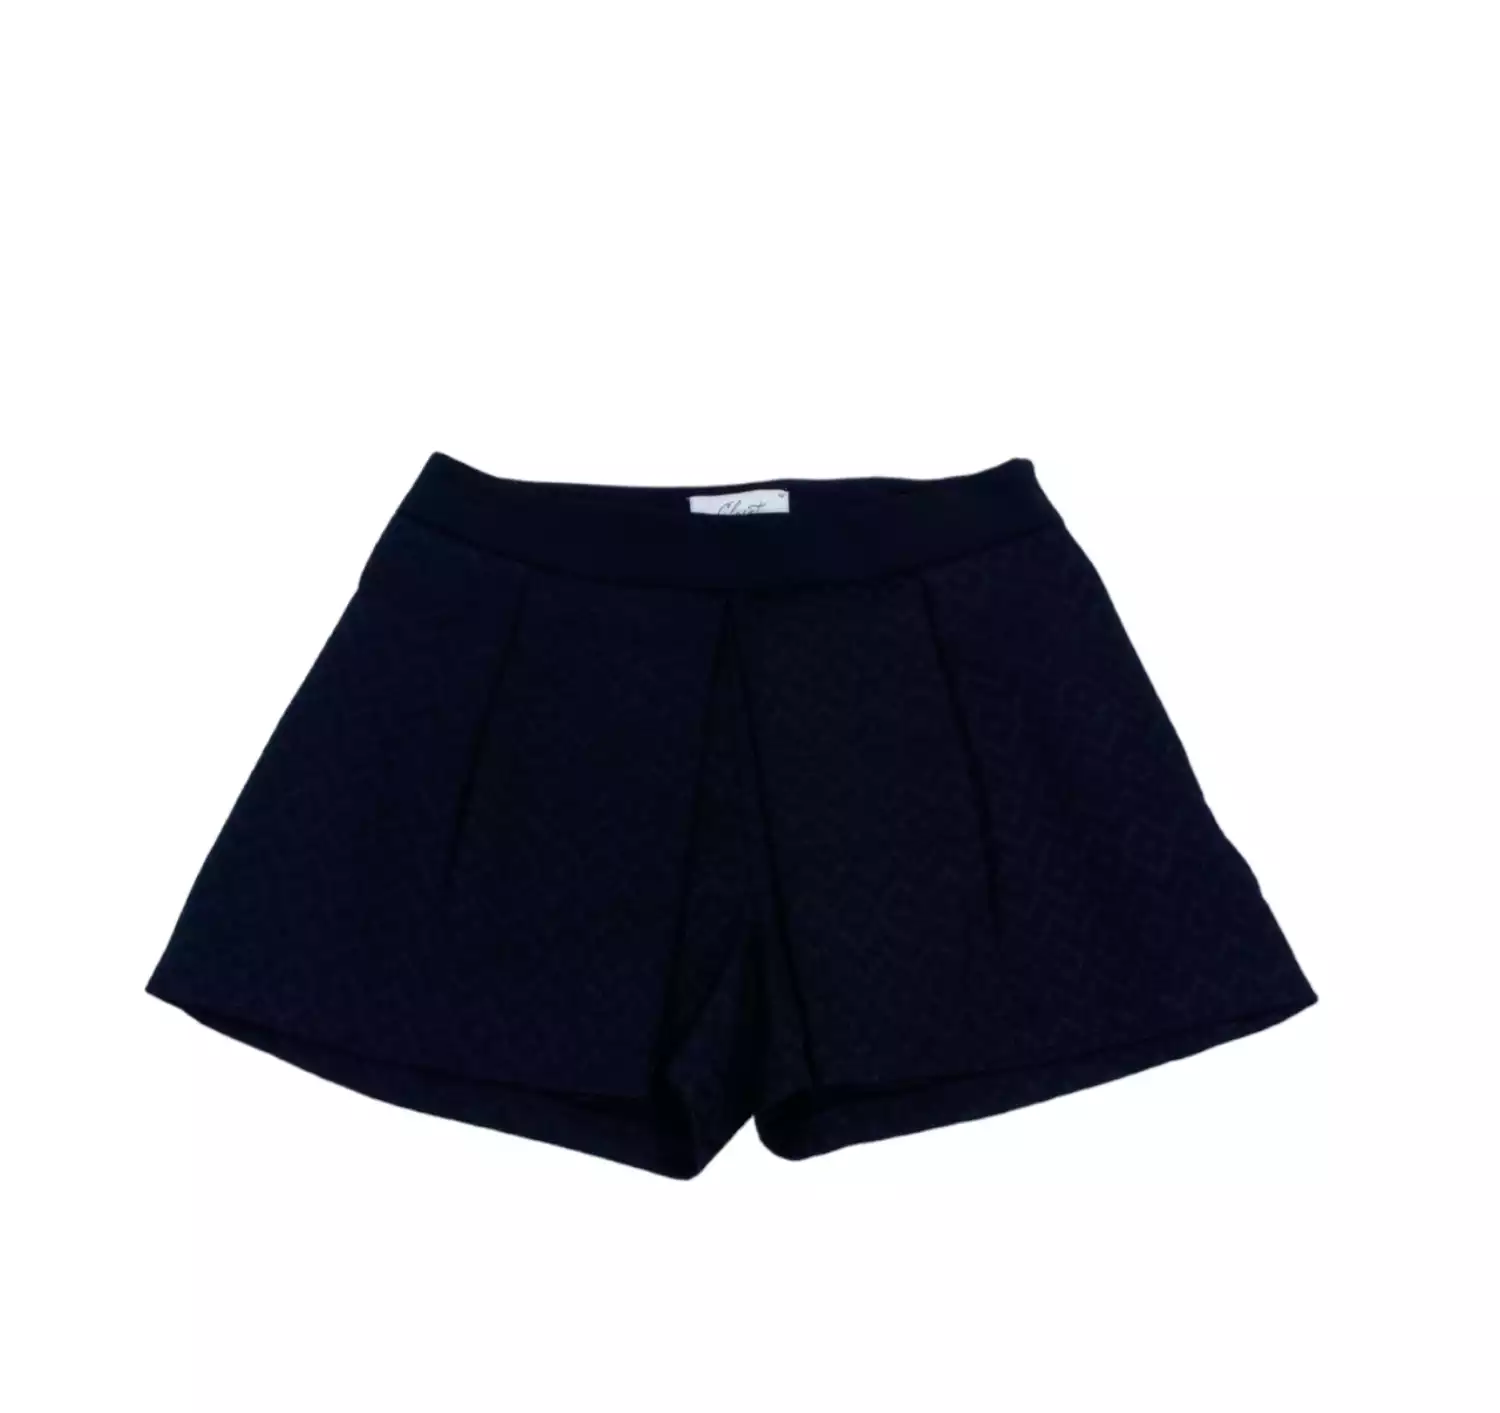 Shorts by Closet